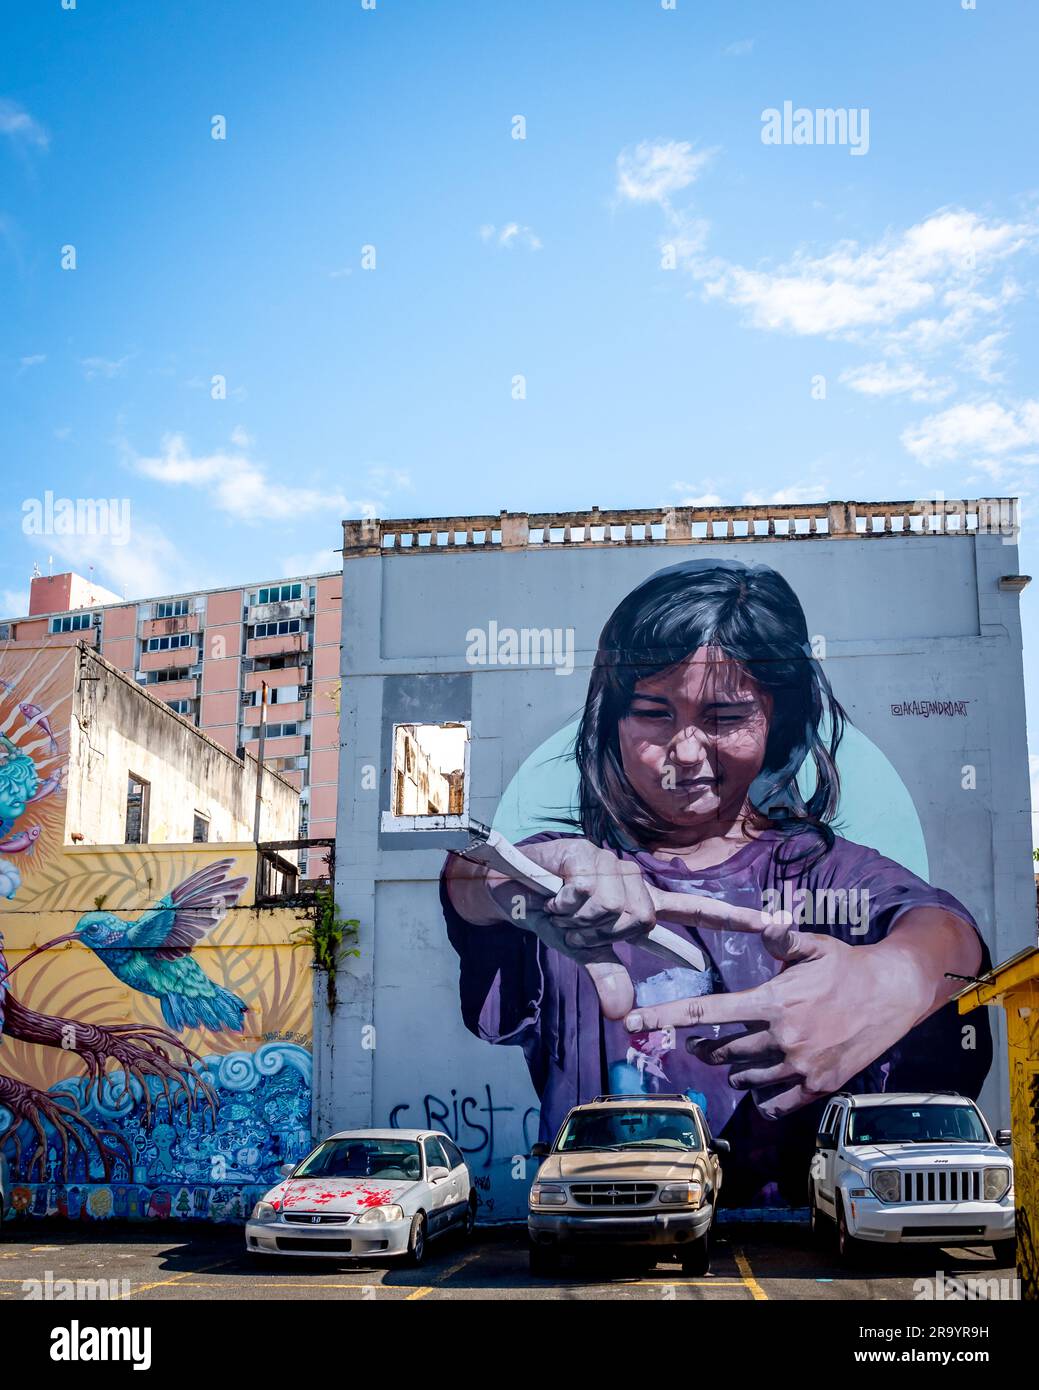 Public art mural on building in Santurce neighborhood in San Juan Puerto Rico with girl artist holding paintbrush on wall above parking lot. Stock Photo